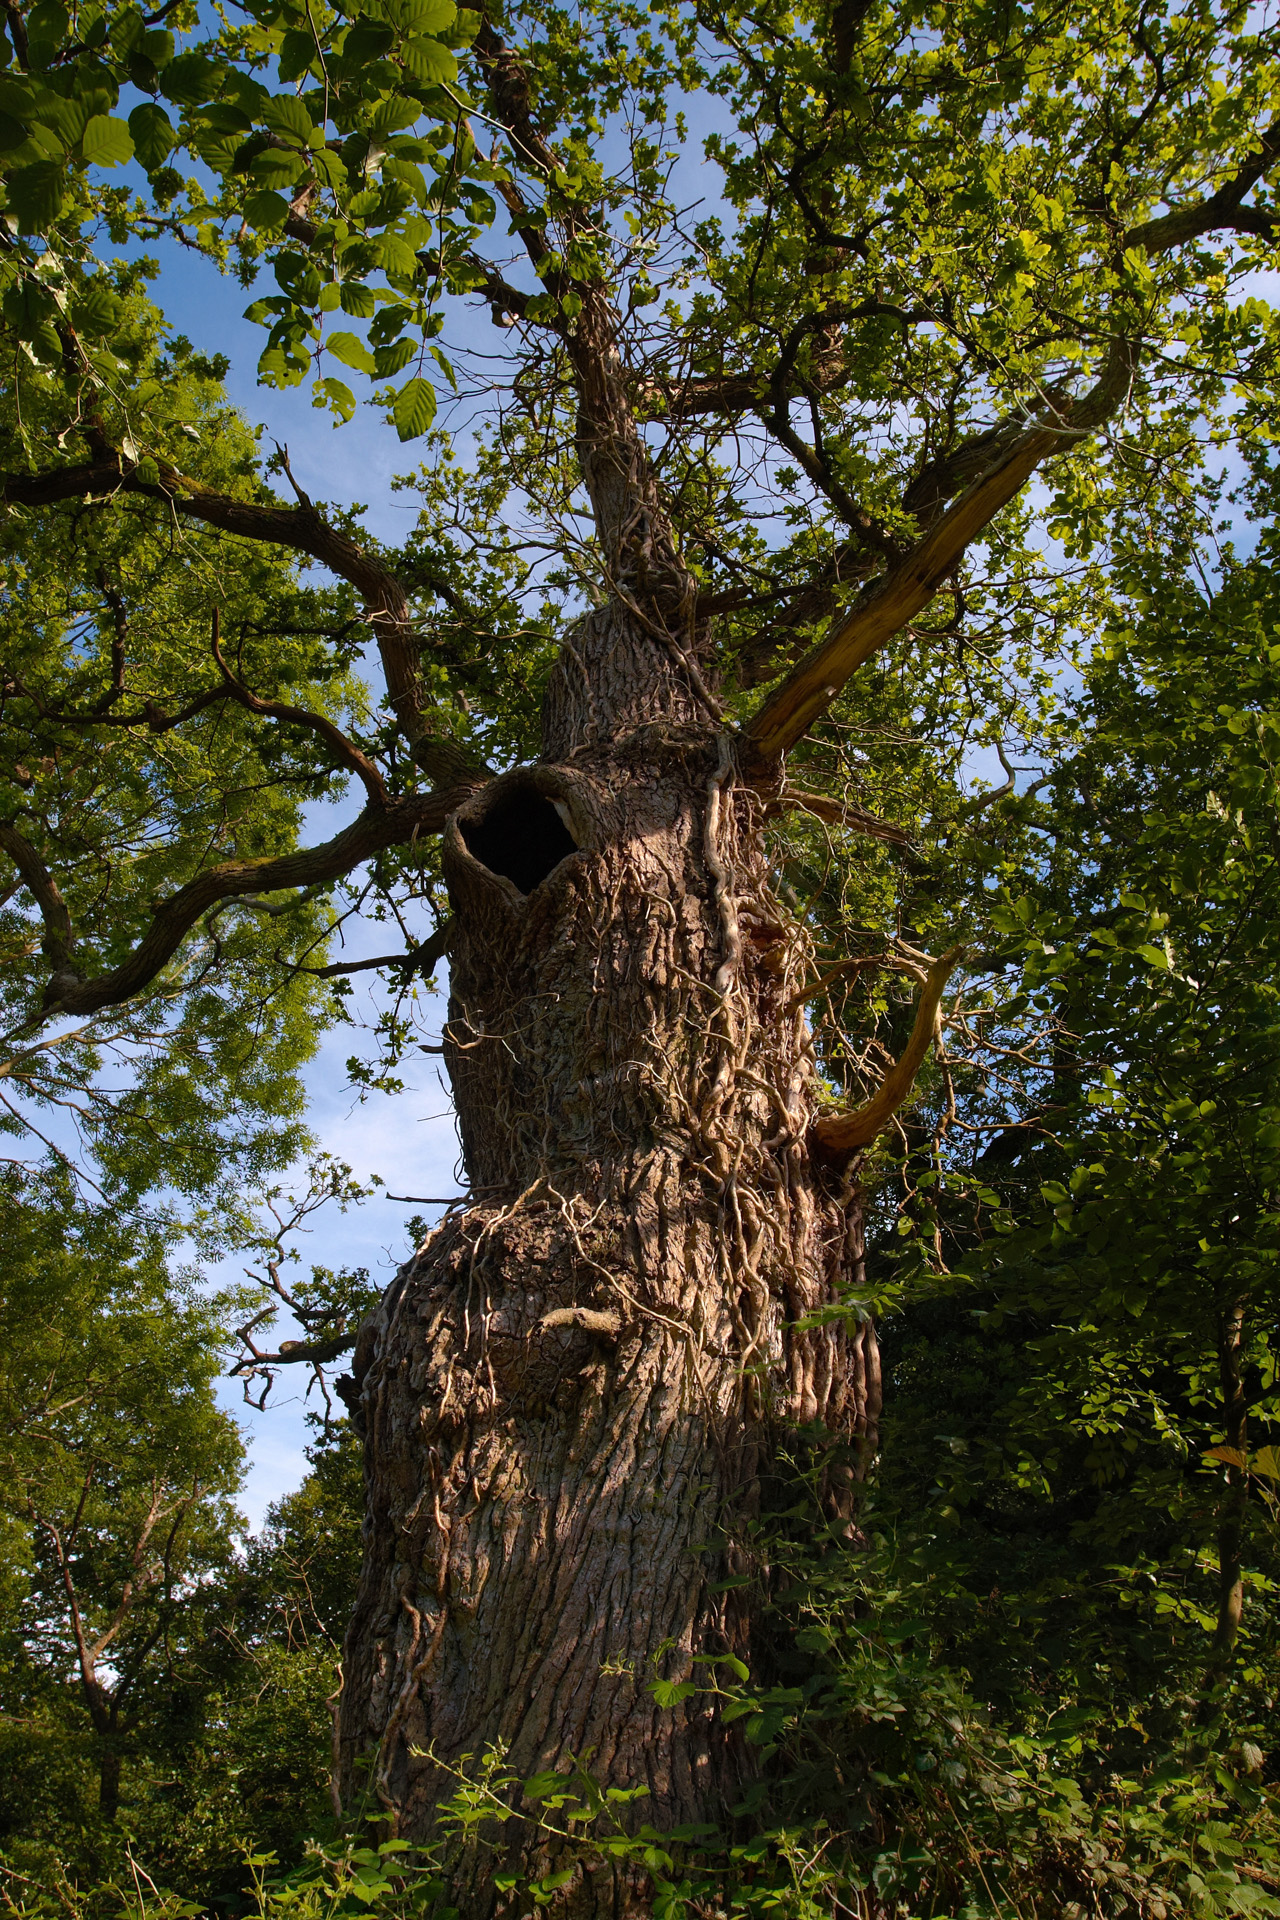 Old Man Burnham, gnarled old Oak tree at Burnham Beeches ancient